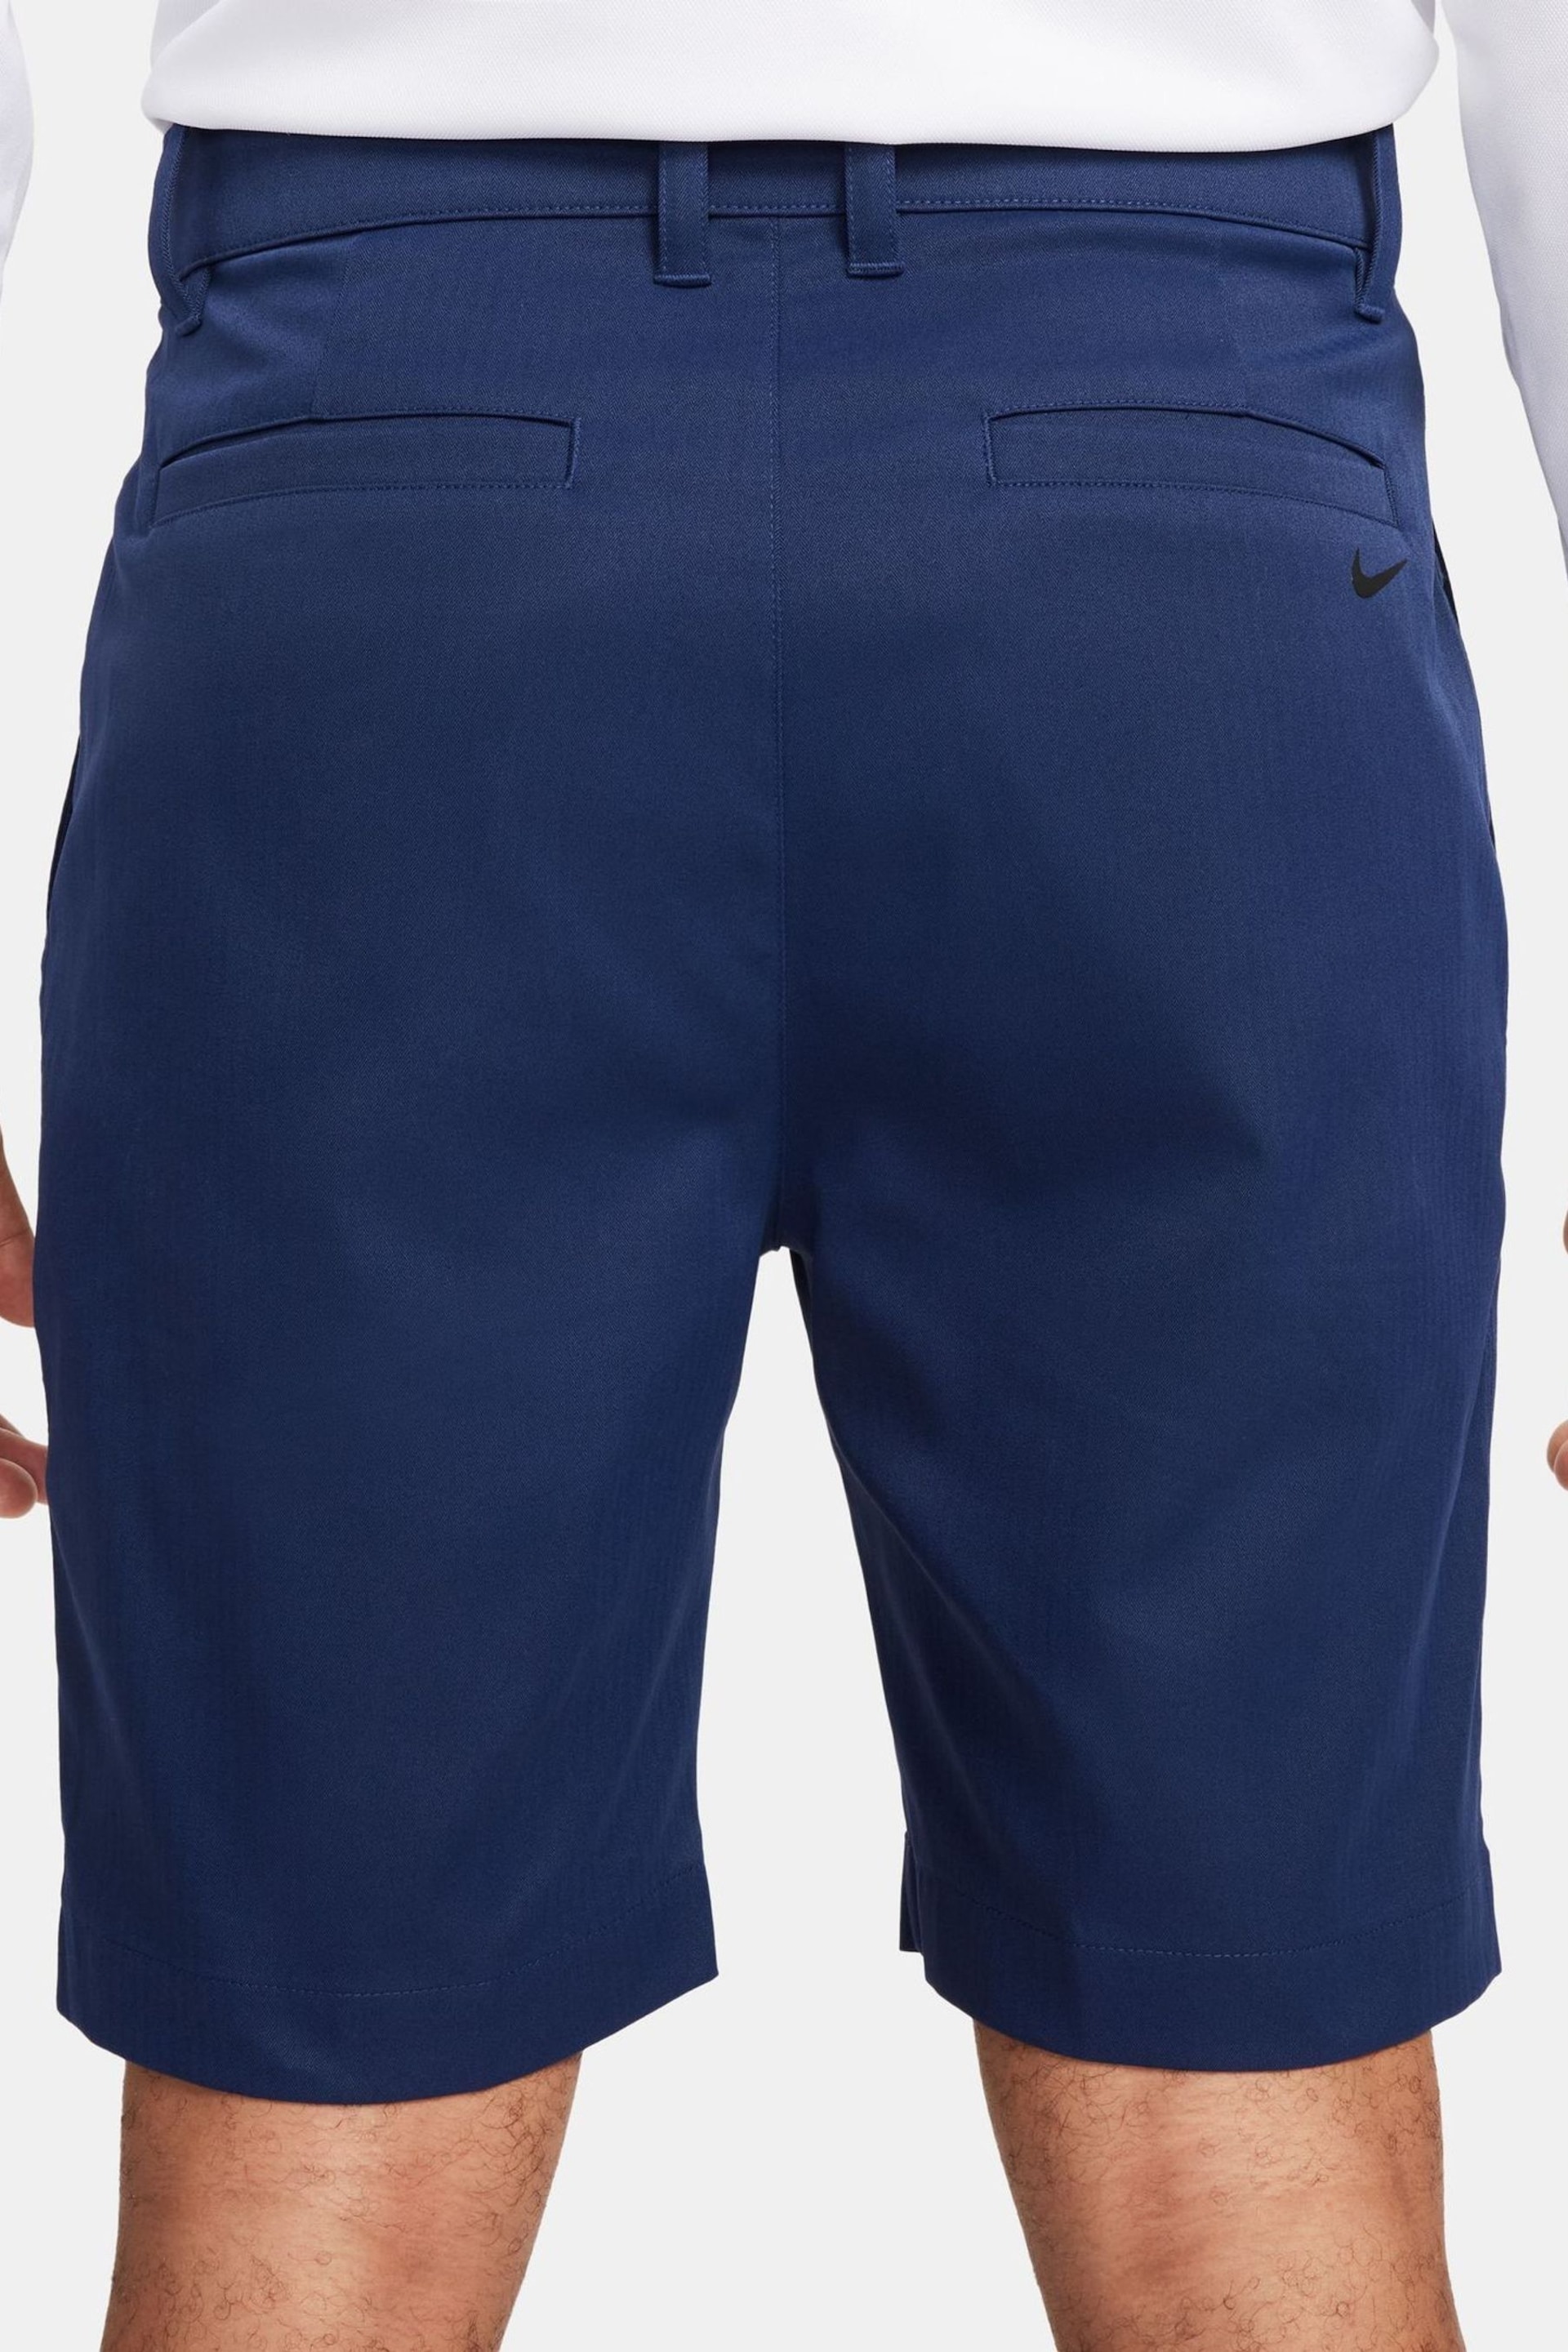 Nike Blue Tour 8 inch Chino Golf Shorts - Image 3 of 9